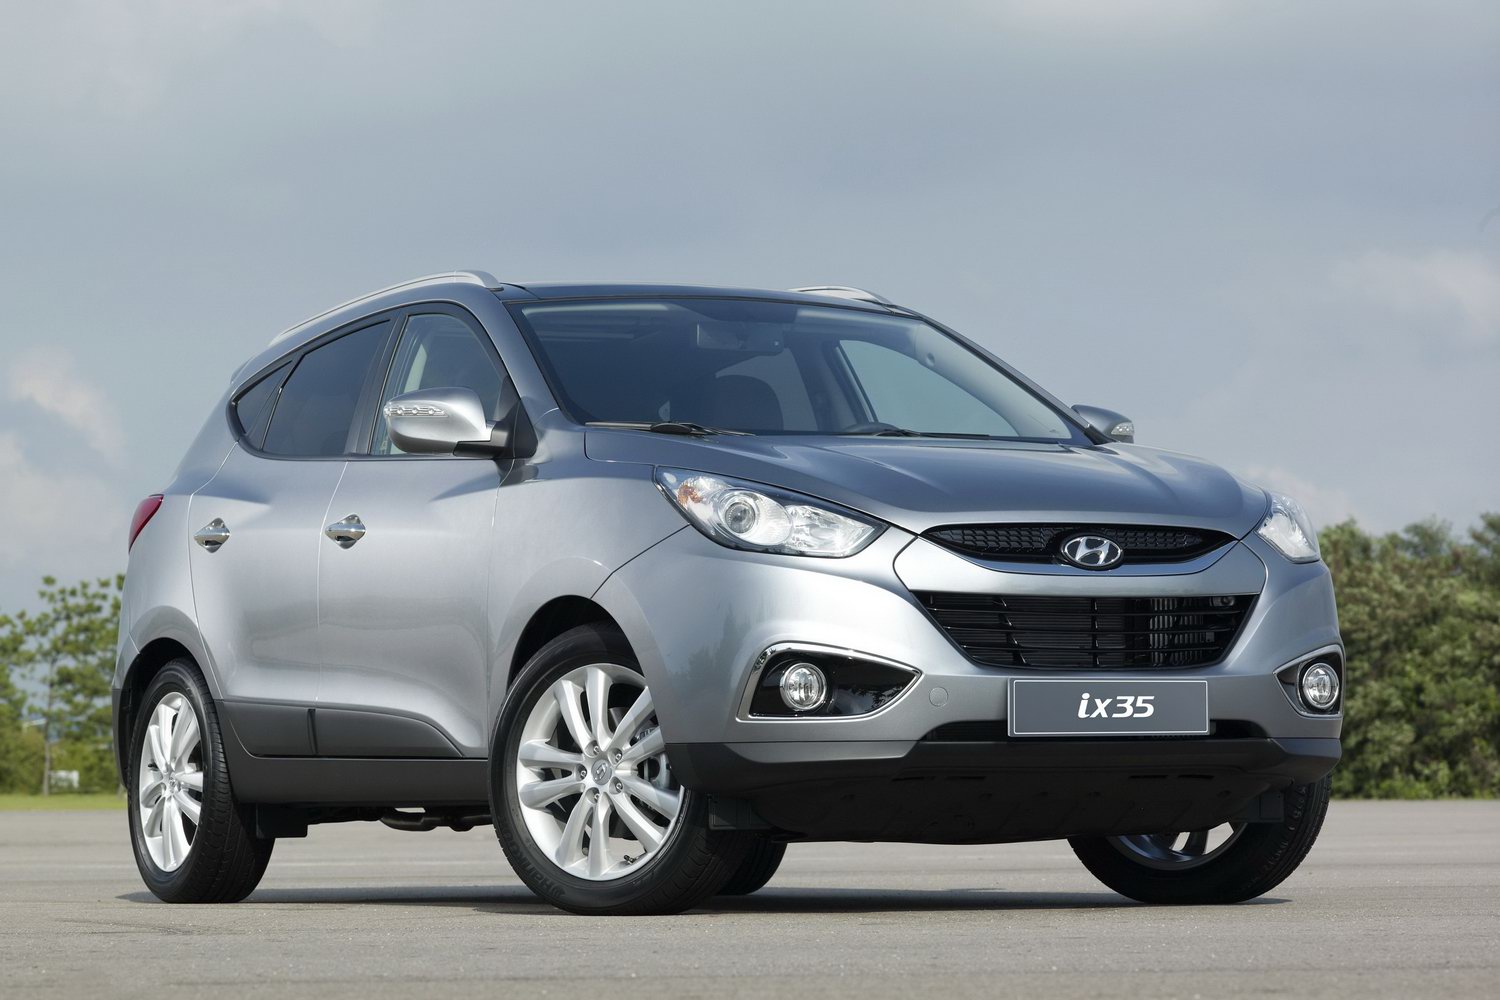 Hyundai ix35 (2009-2015) used car buying guide